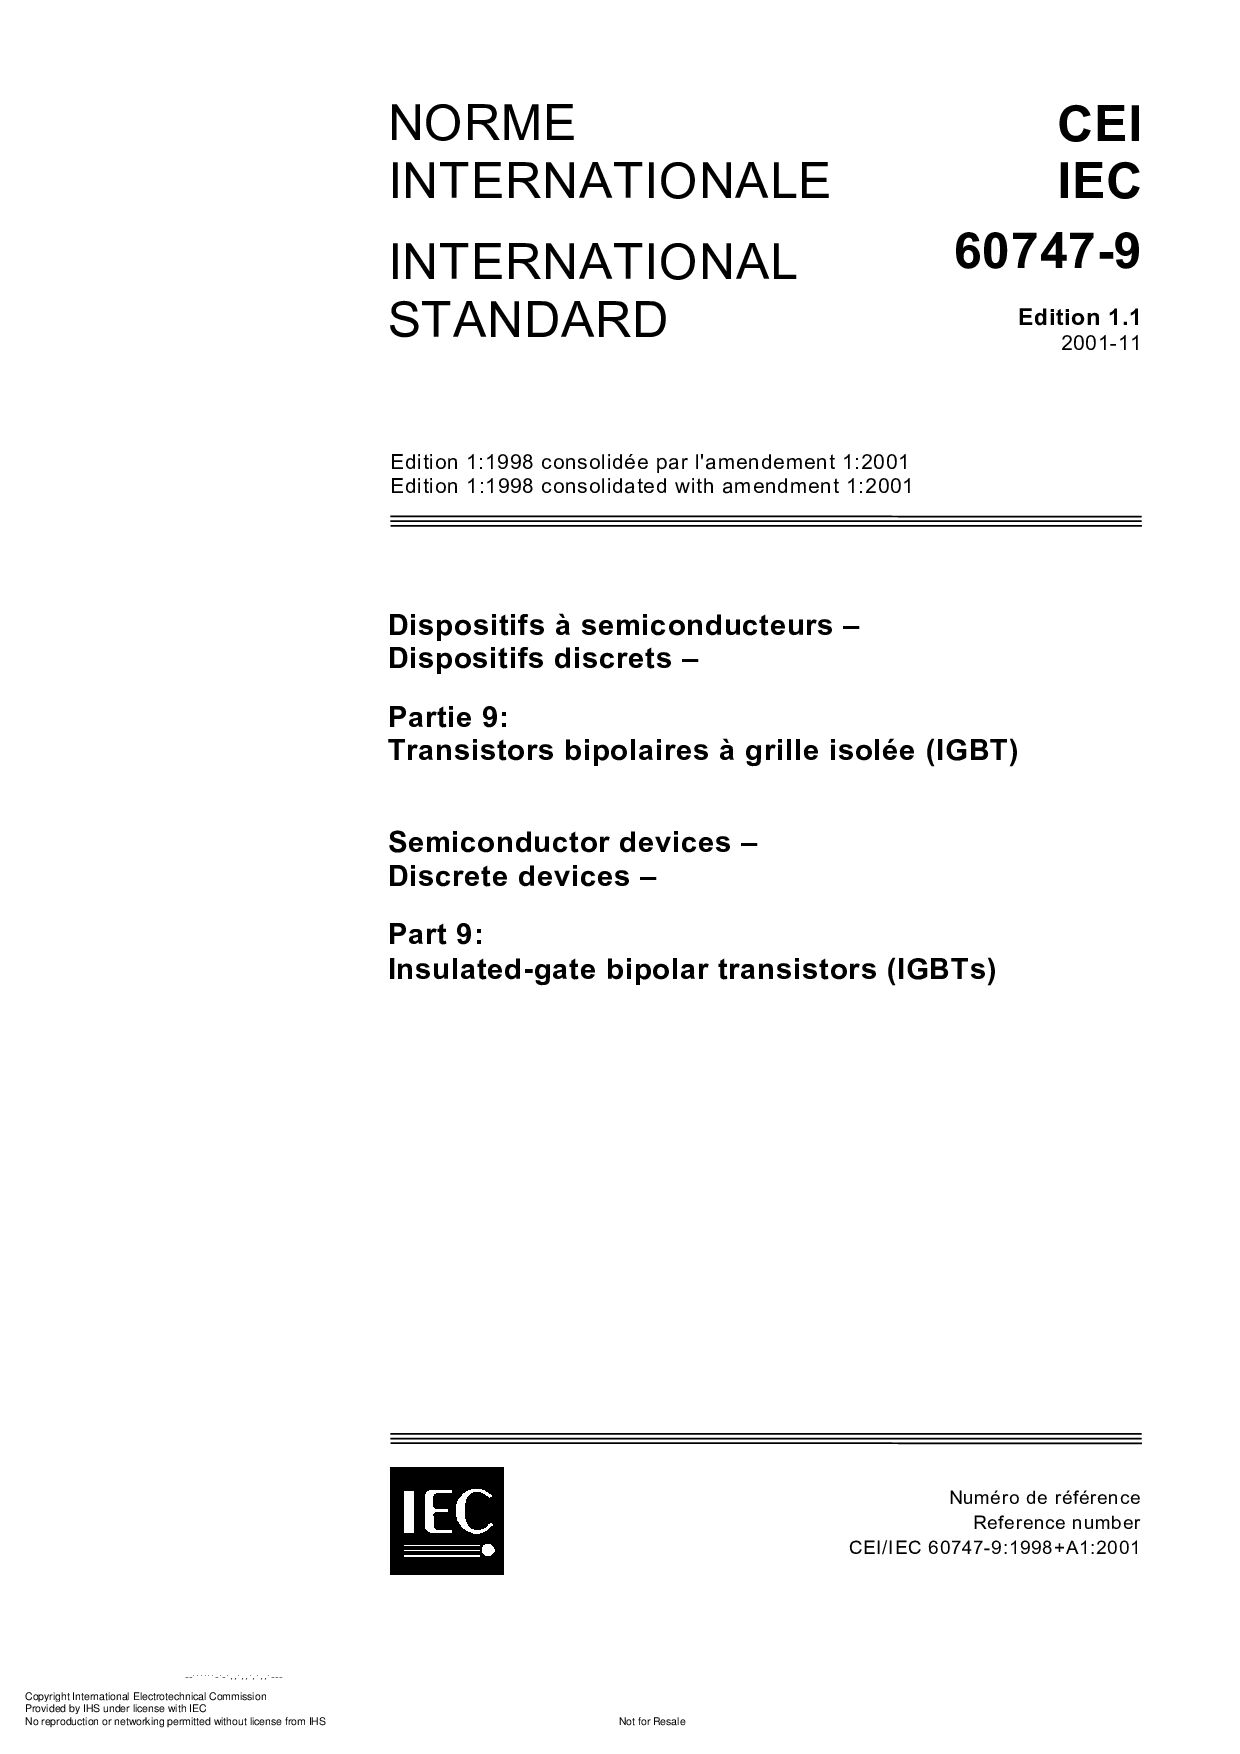 IEC 60747-9 Edition 1.1-2001